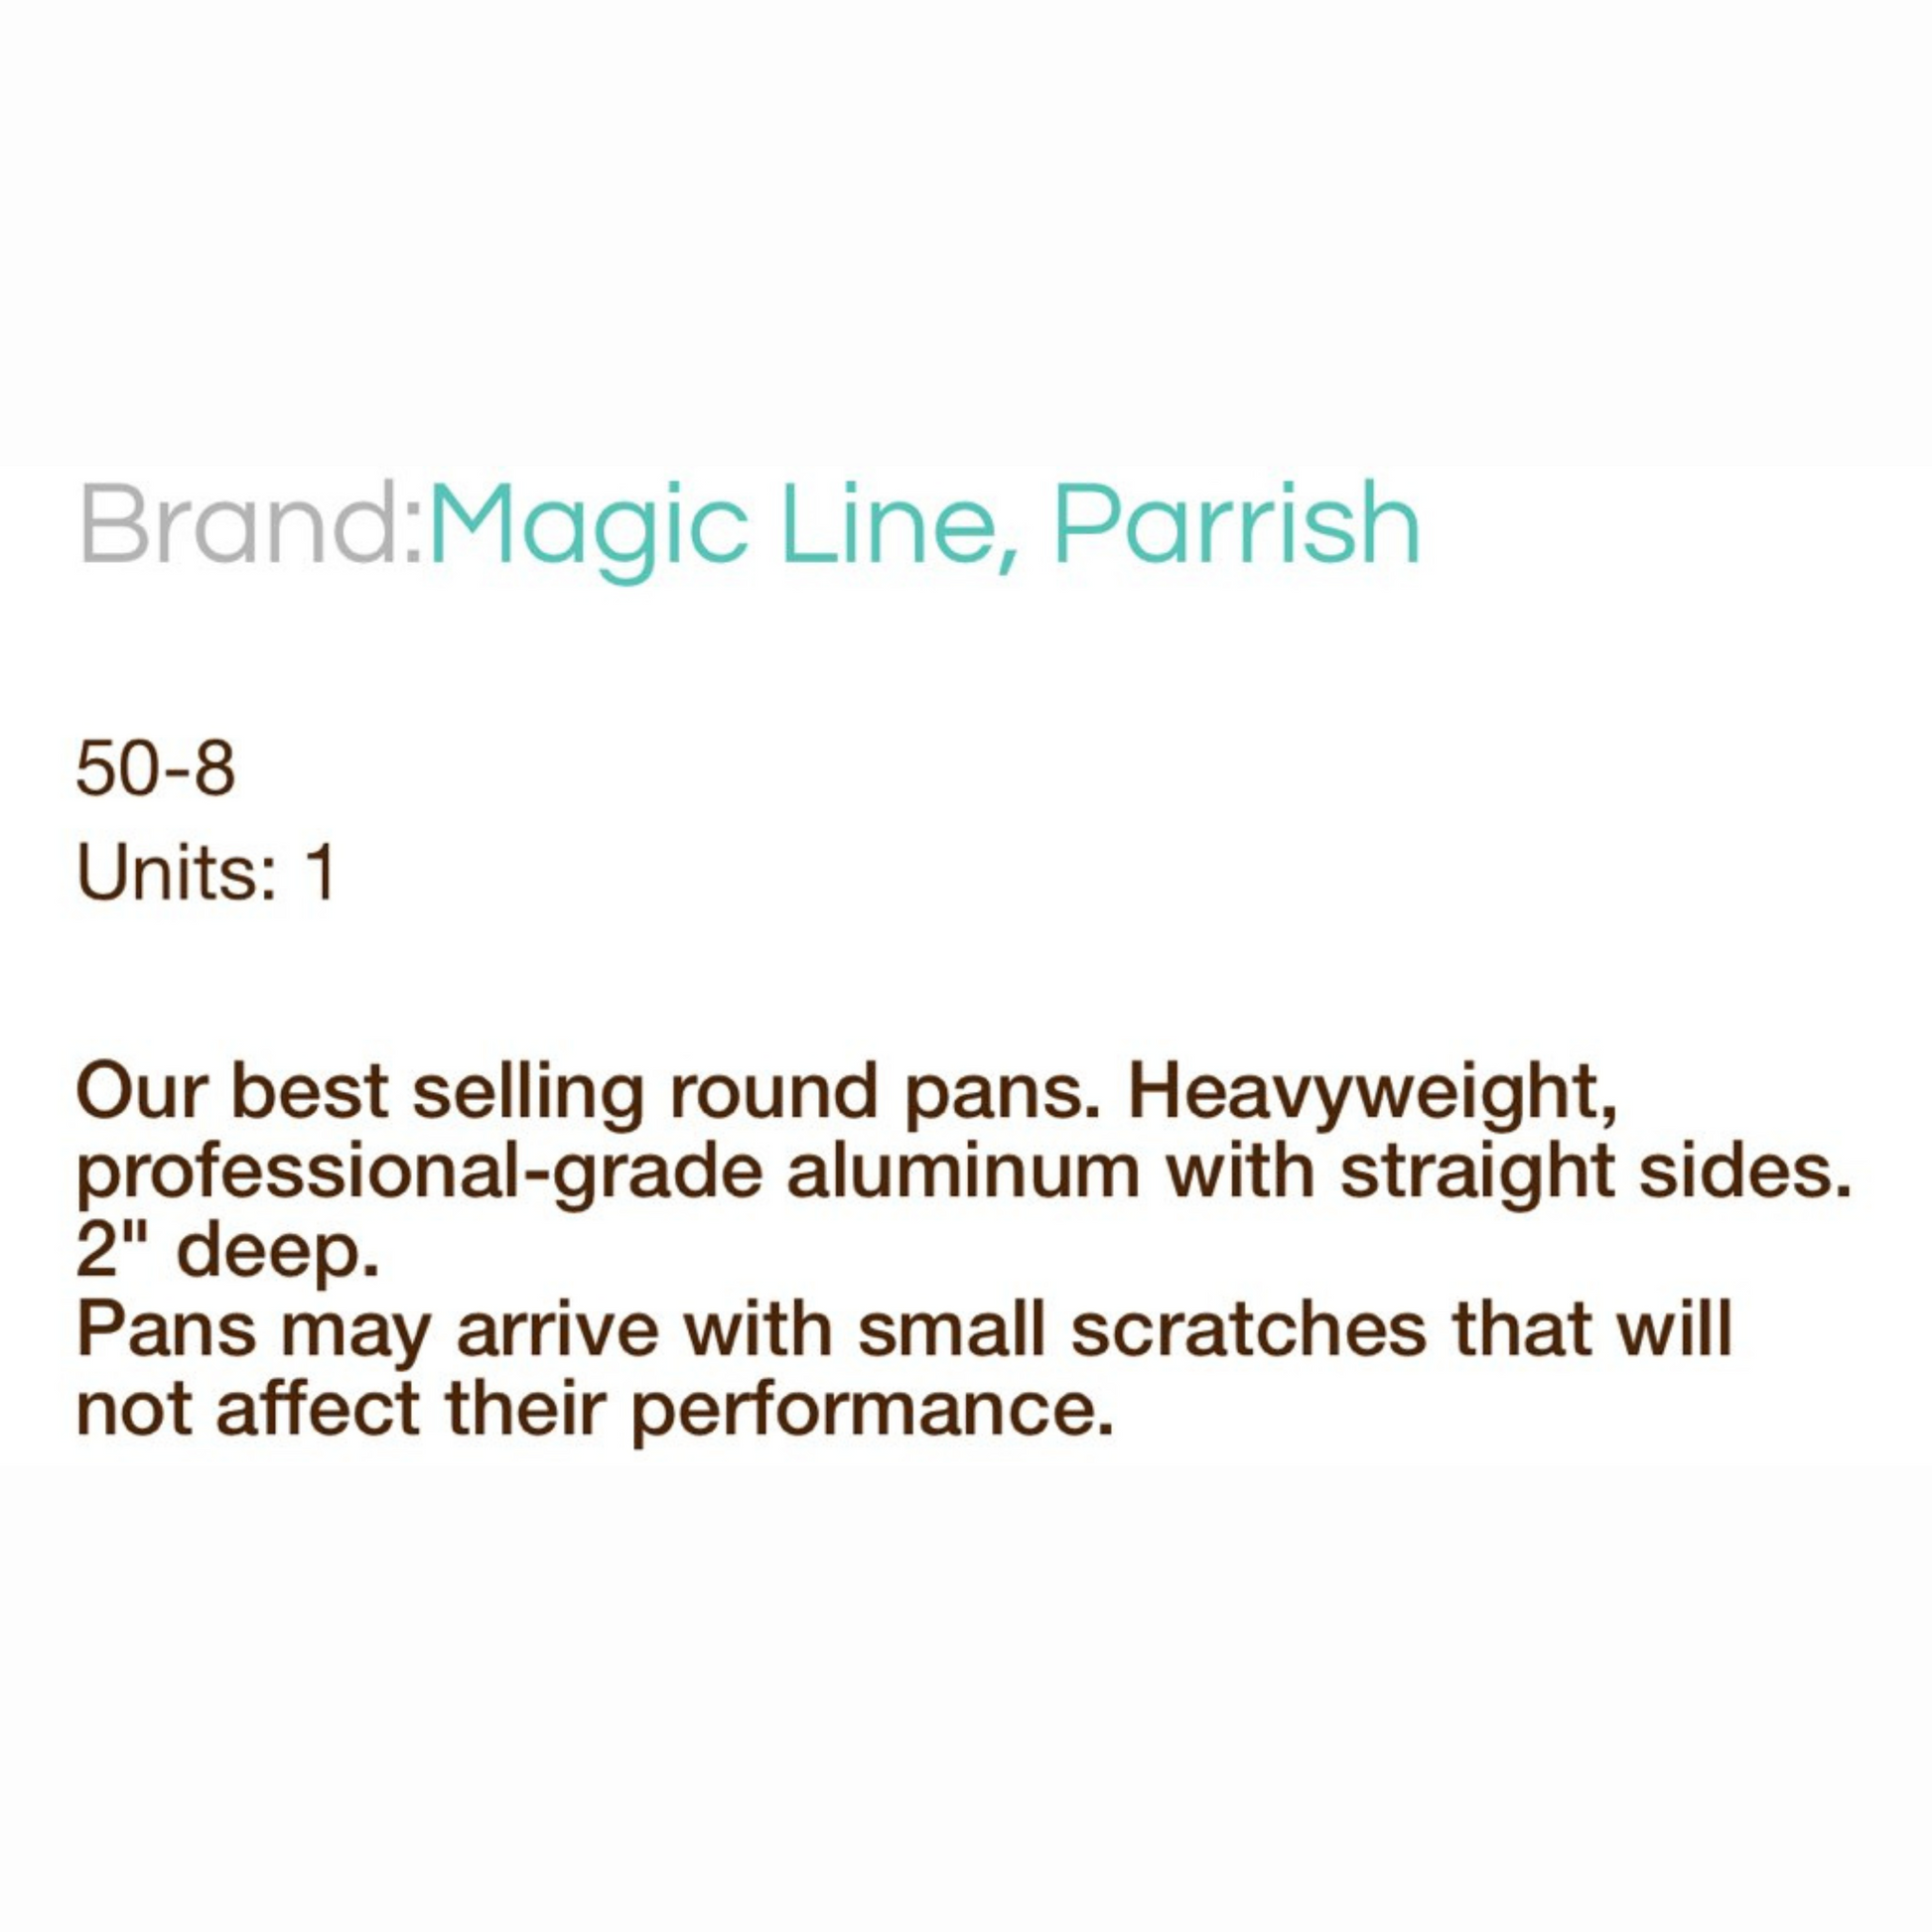 Parrish Magic Line 12 x 18 x 2 inch Oblong Cake Pan